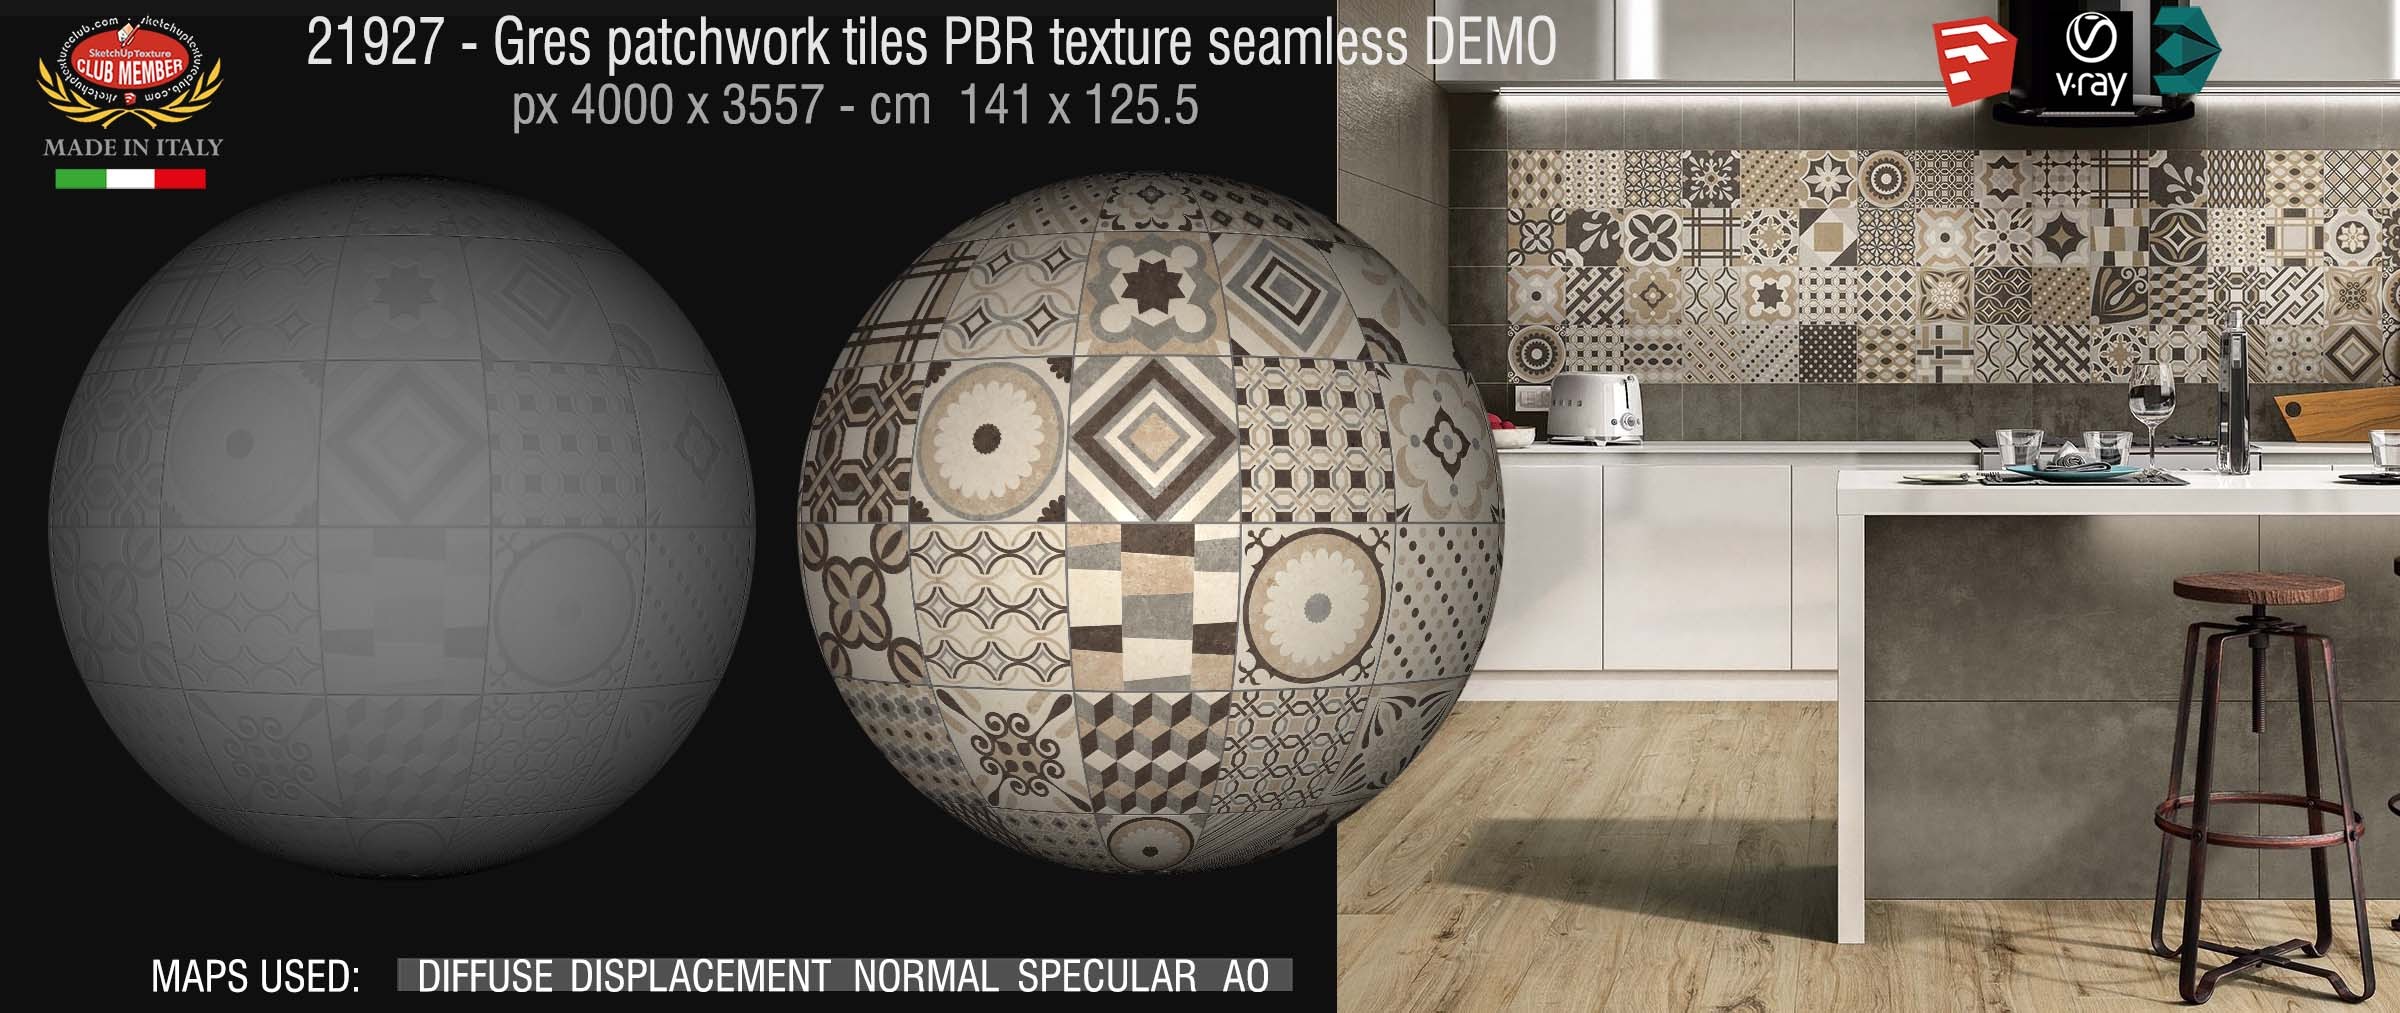 21927 gres patchwork tiles PBR texture seamless DEMO